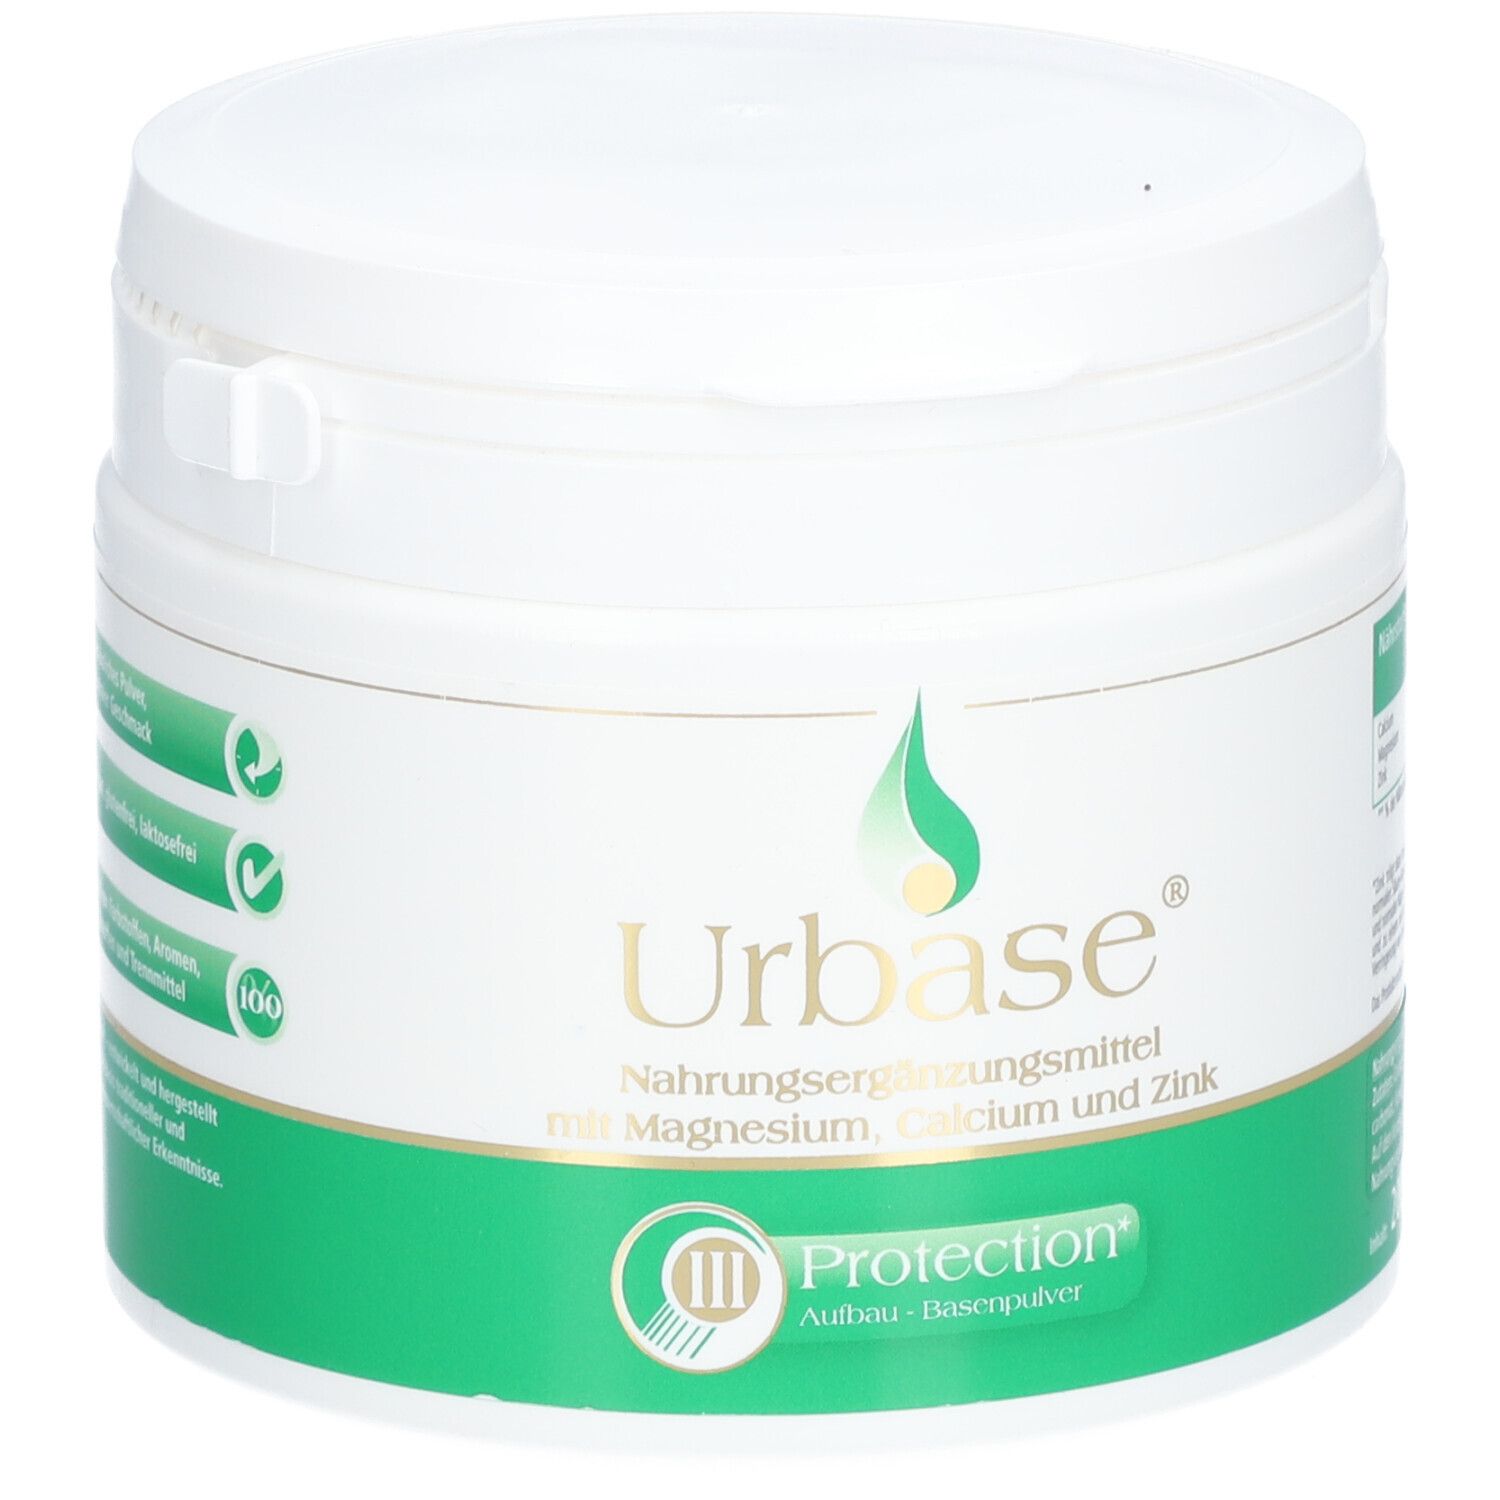 Urbase® III Protection Poudre basique